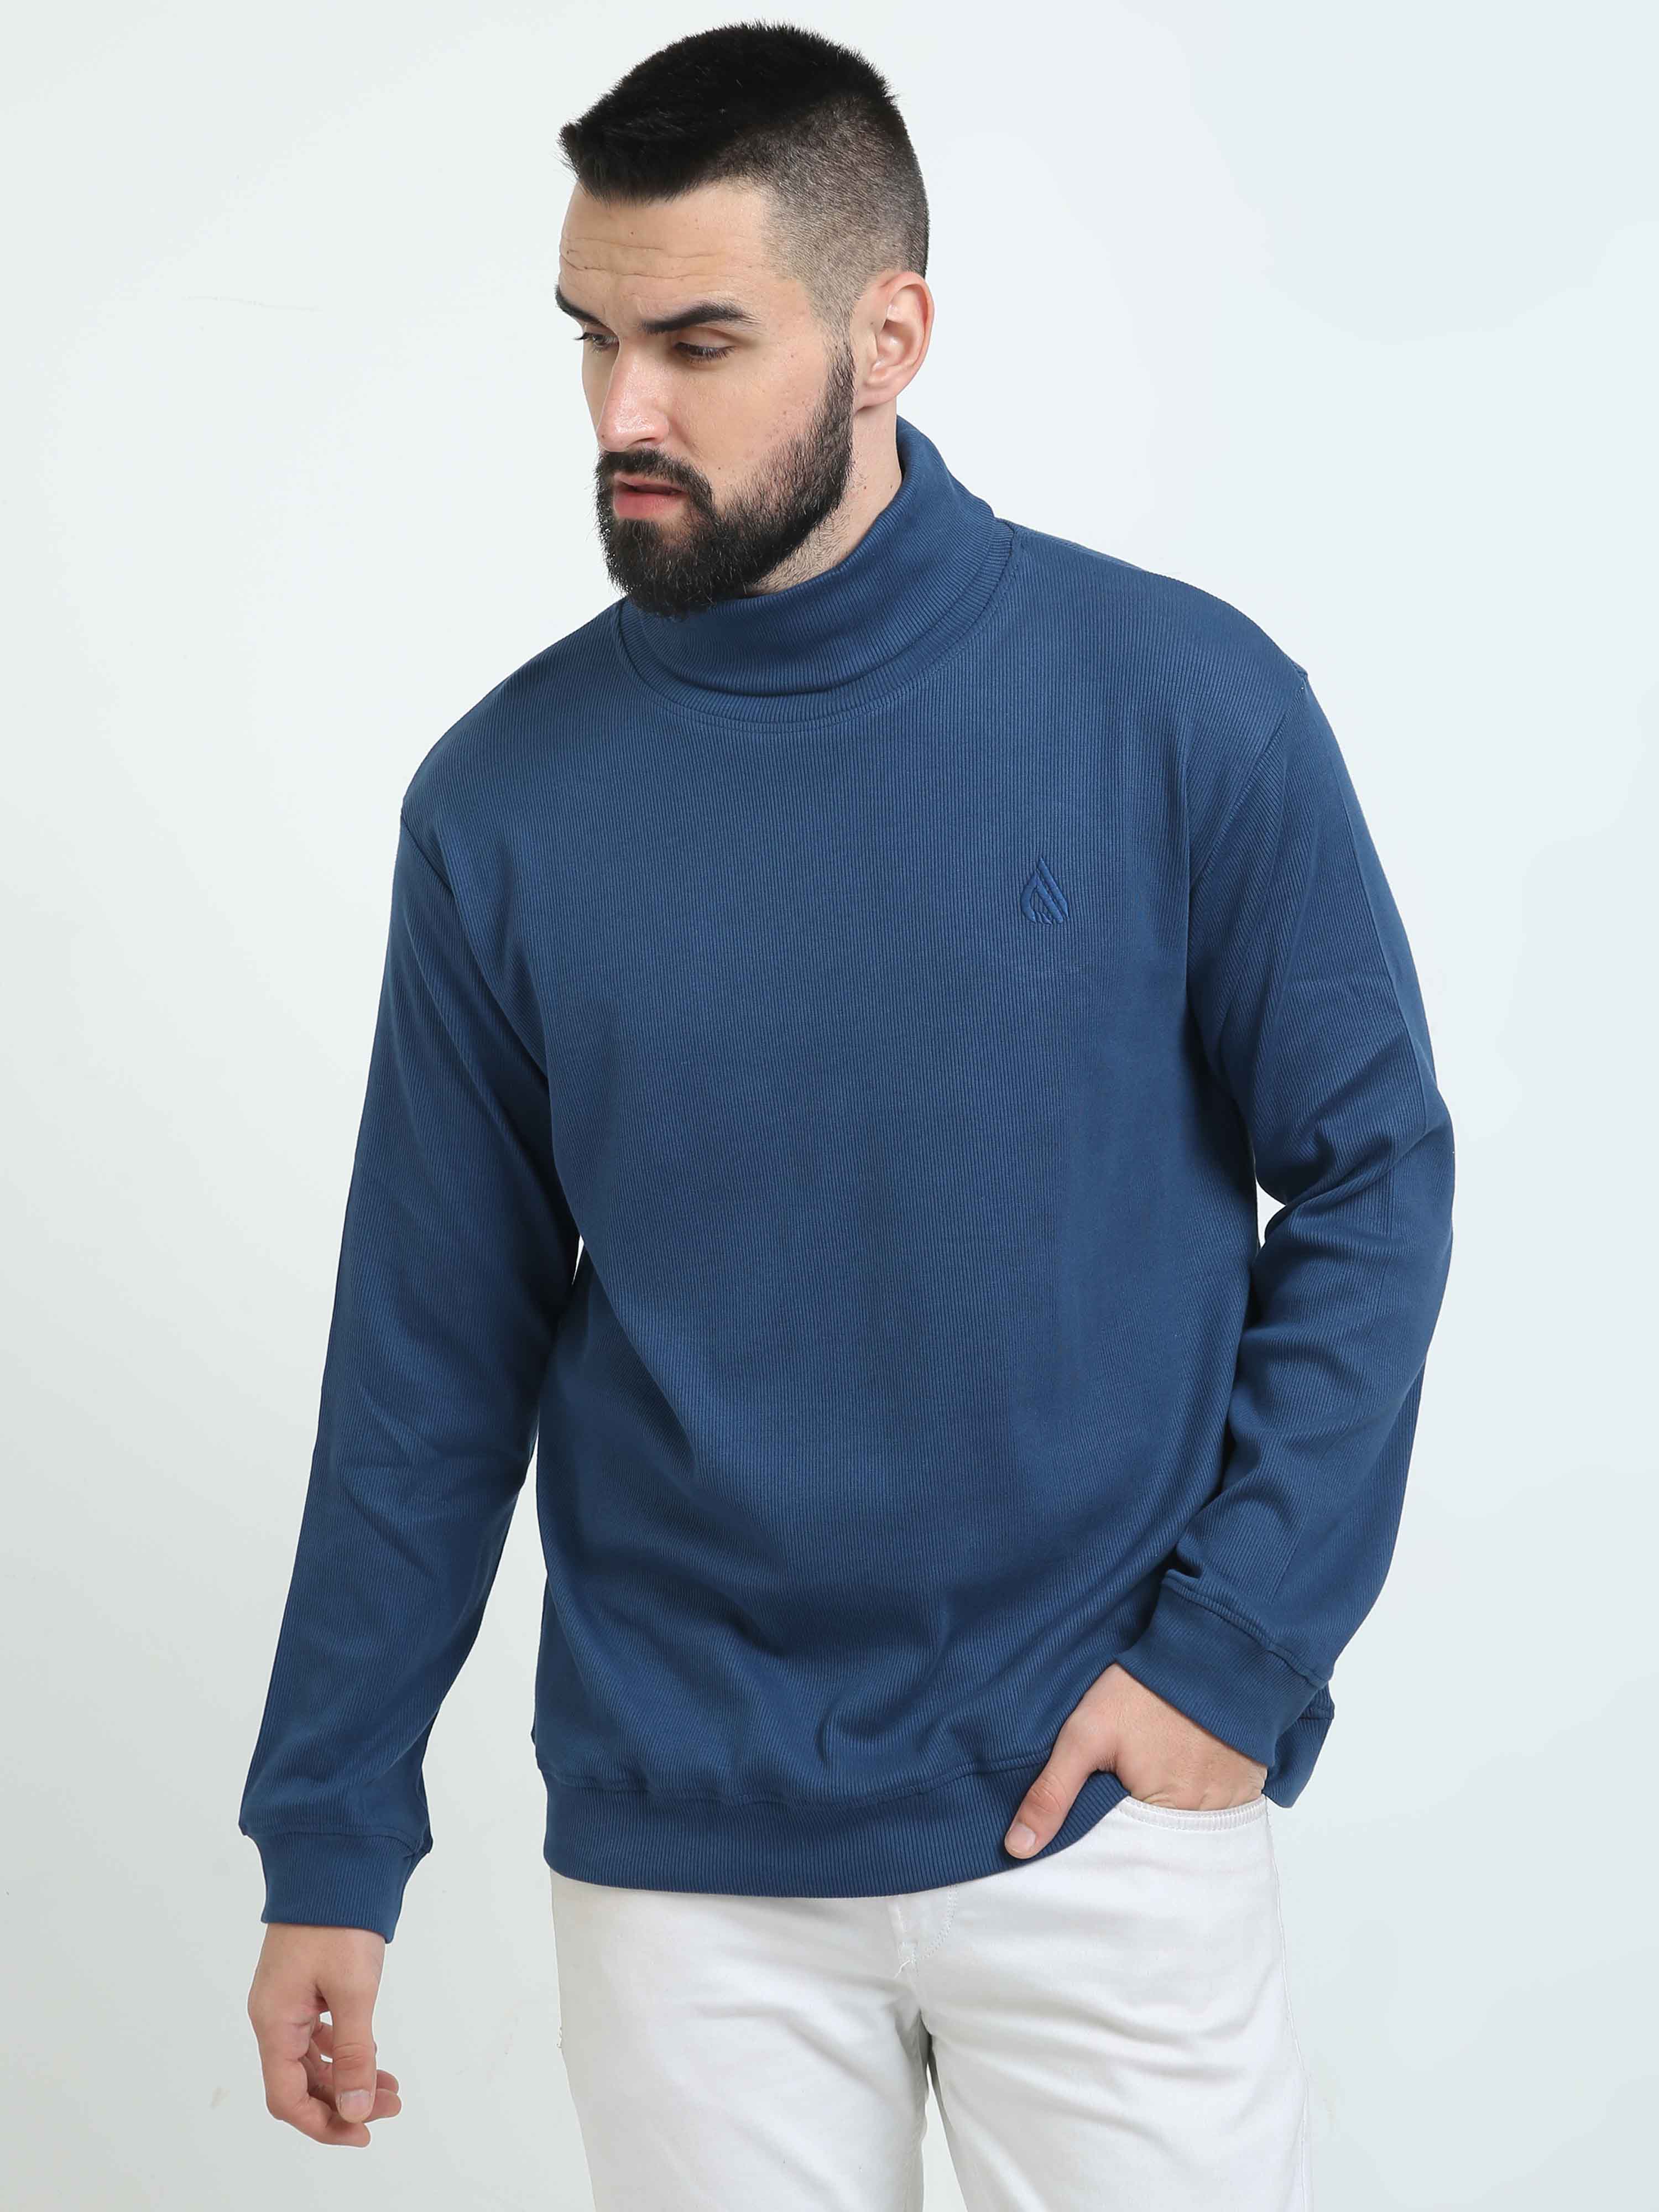 Catalina Blue Turtle Neck Sweatshirt